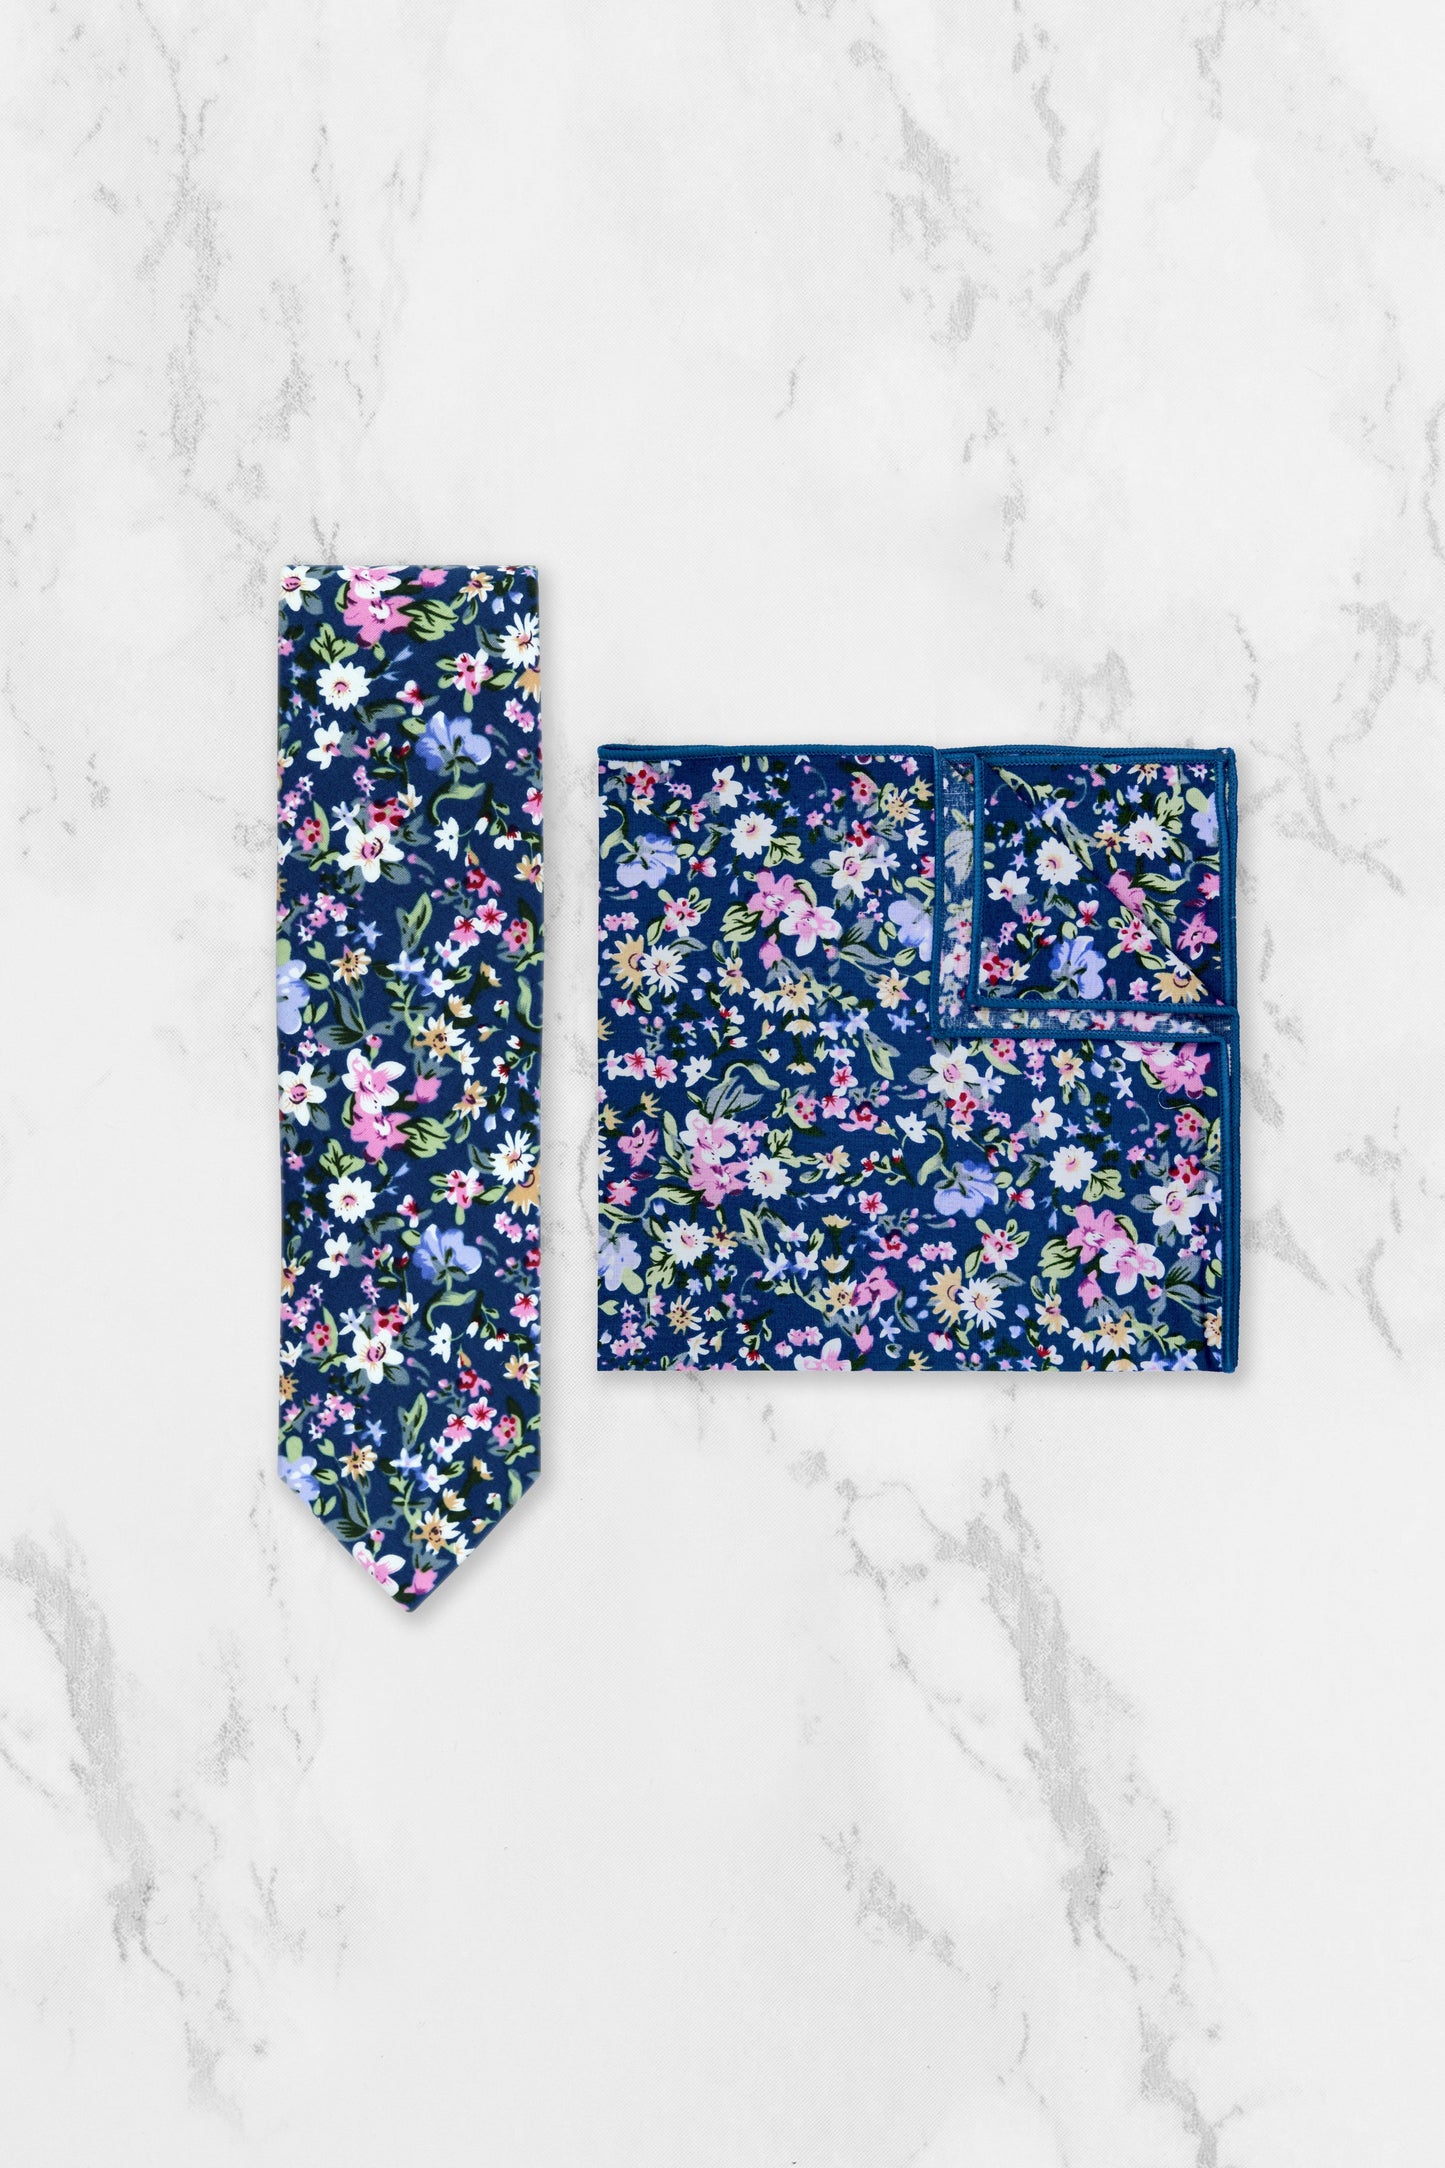 100% Cotton Floral Print Child Bow Tie - Blue & Pink